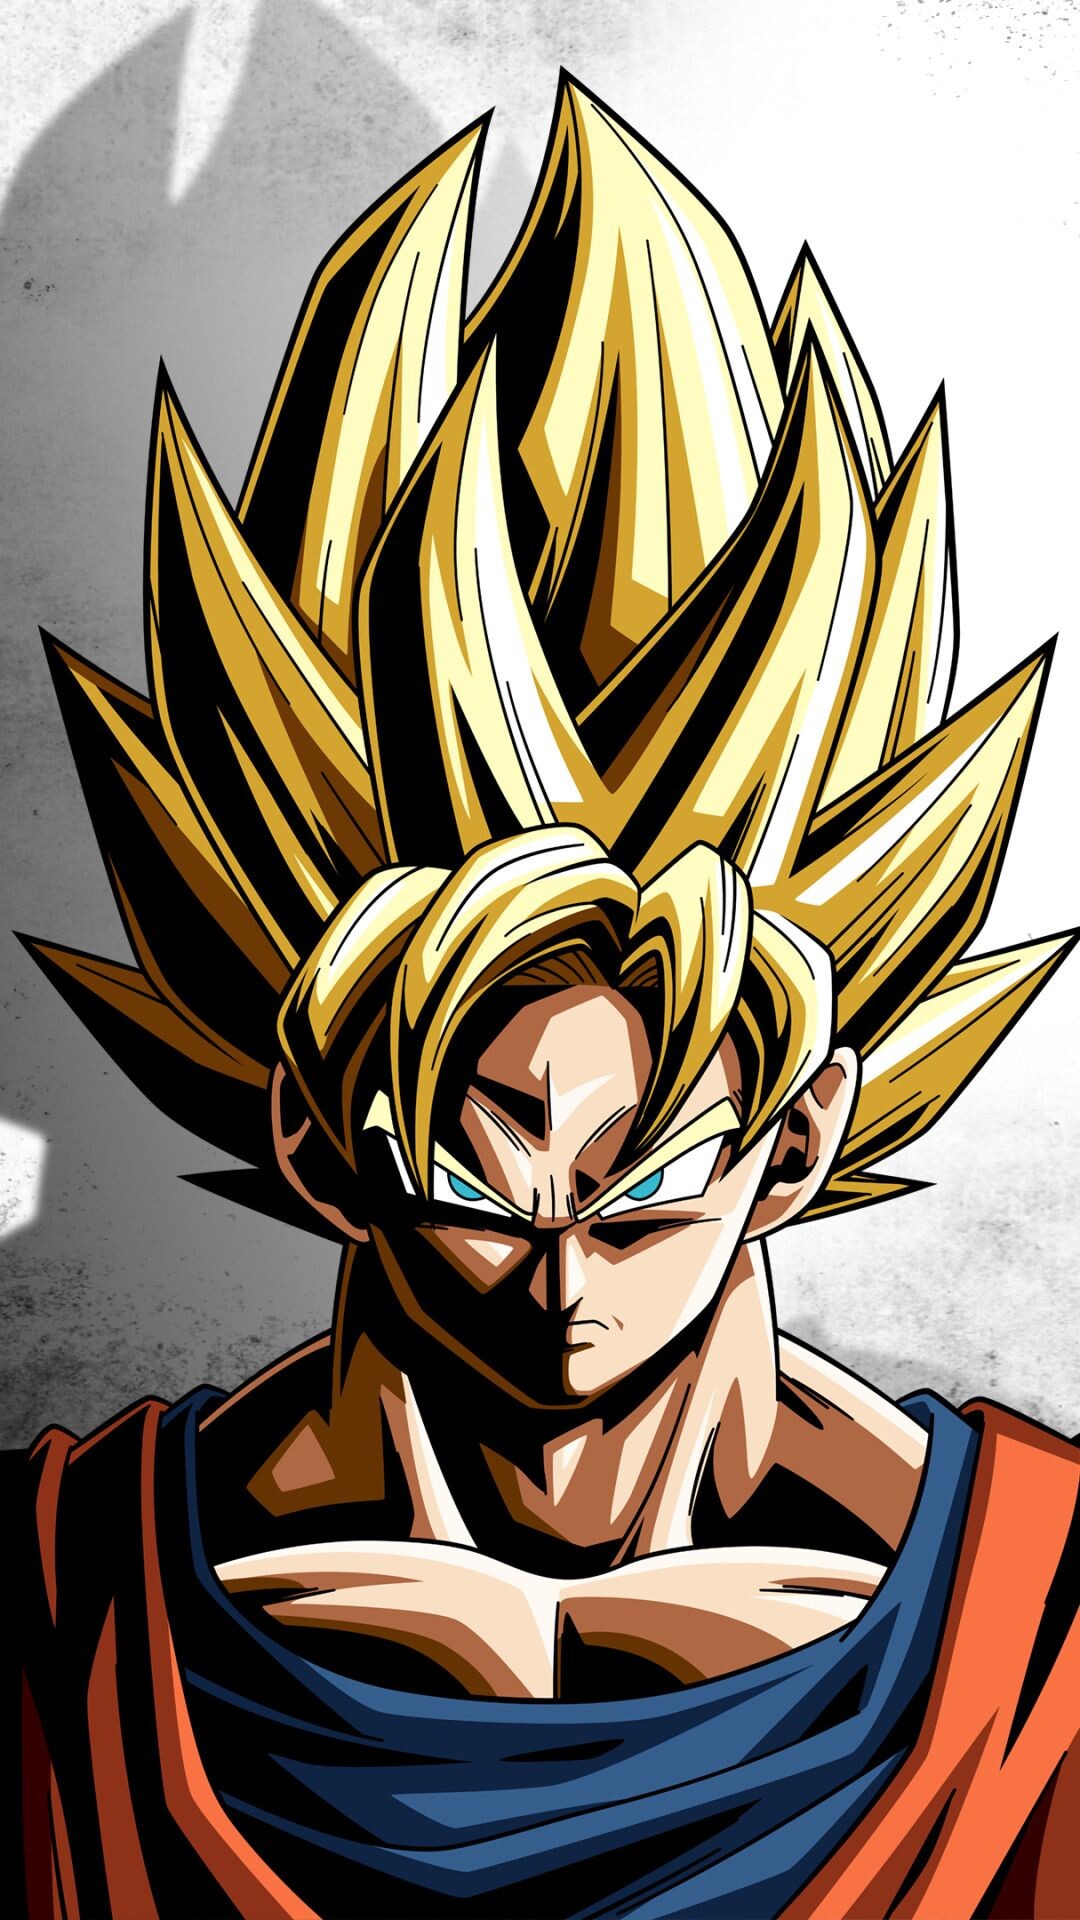 Goku Super Saiyan: Character transformation, Achieving SS form, Japanese anime and manga series. 1080x1920 Full HD Background.